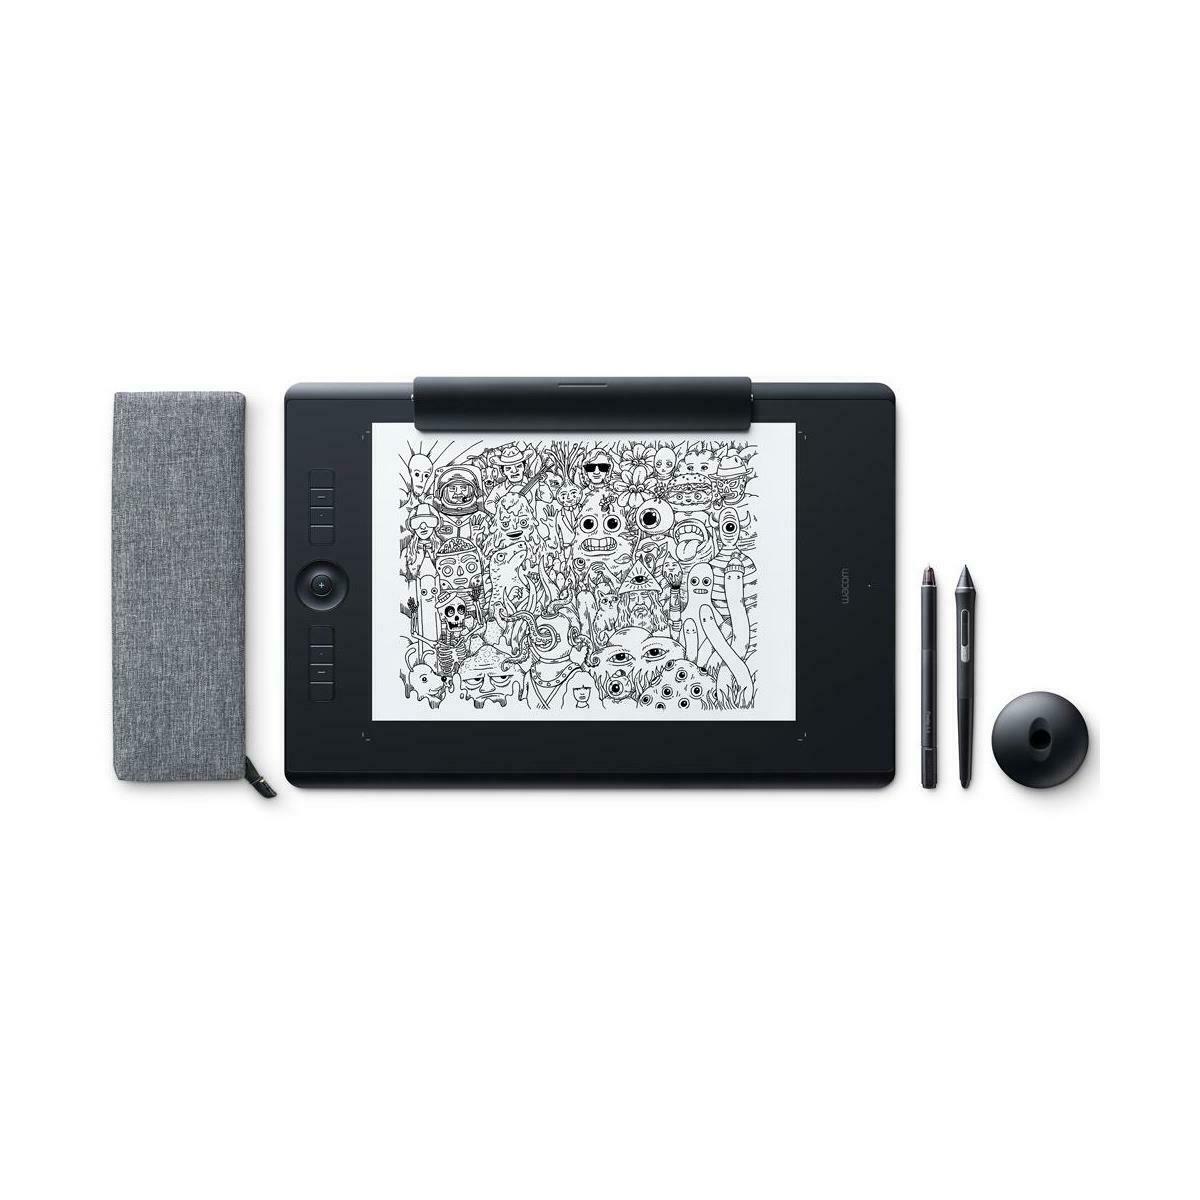 Wacom Intuos Pro Paper Edition Creative Pen Tablet, Large, Black #PTH860P